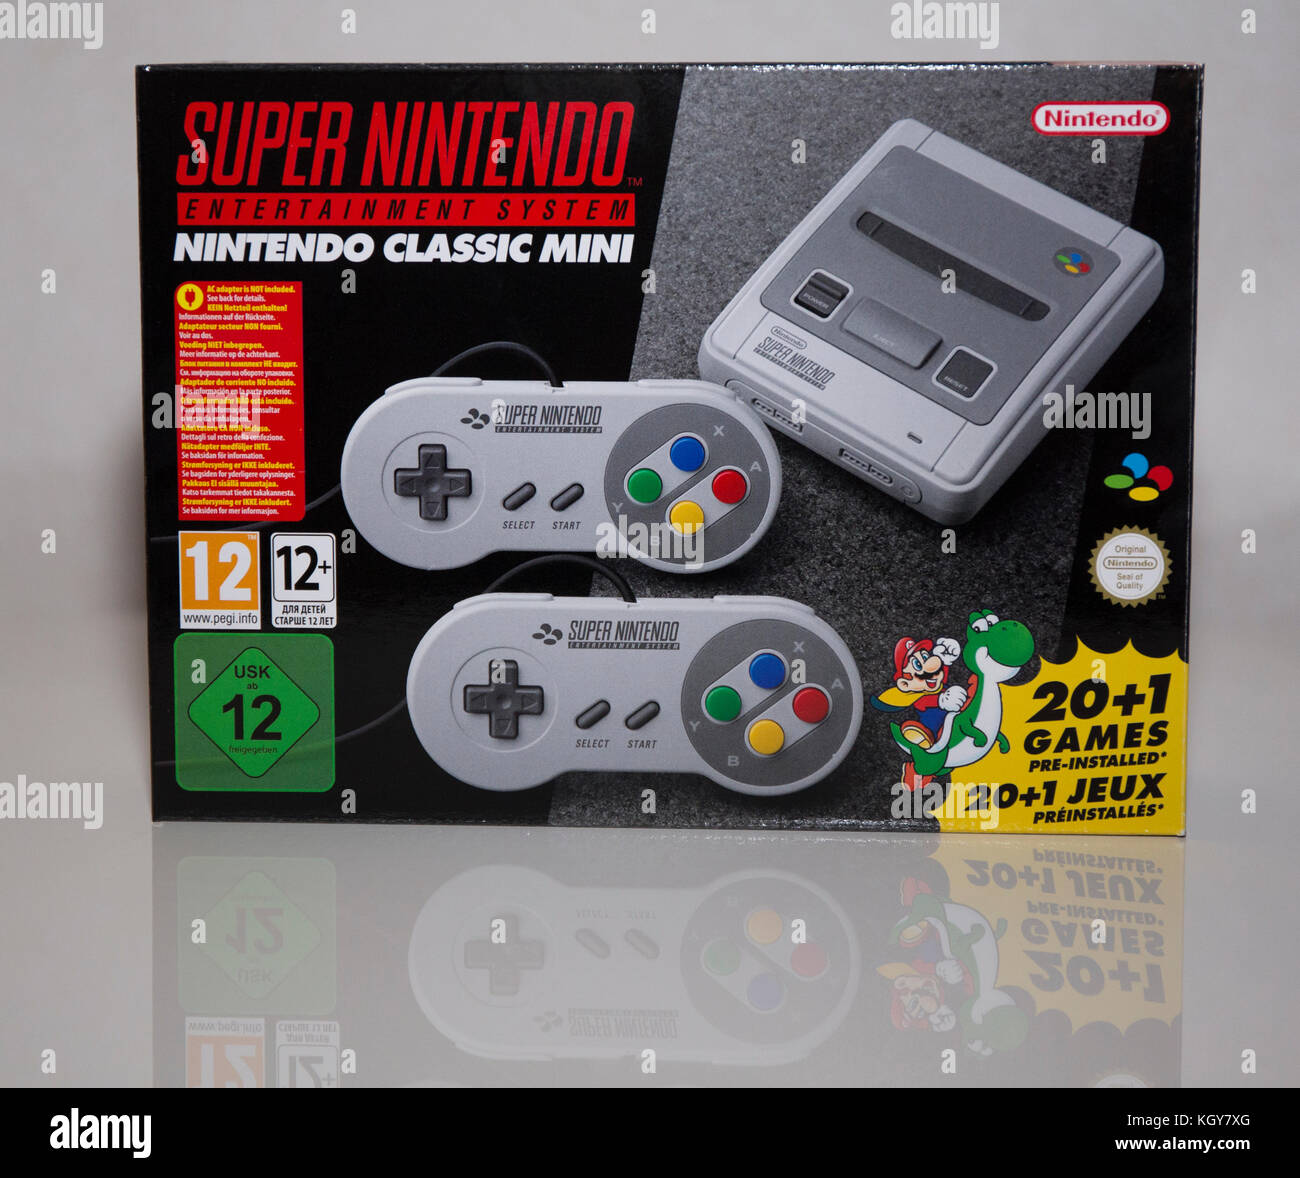 New Snes mini classic box from Nintendo Stock Photo - Alamy